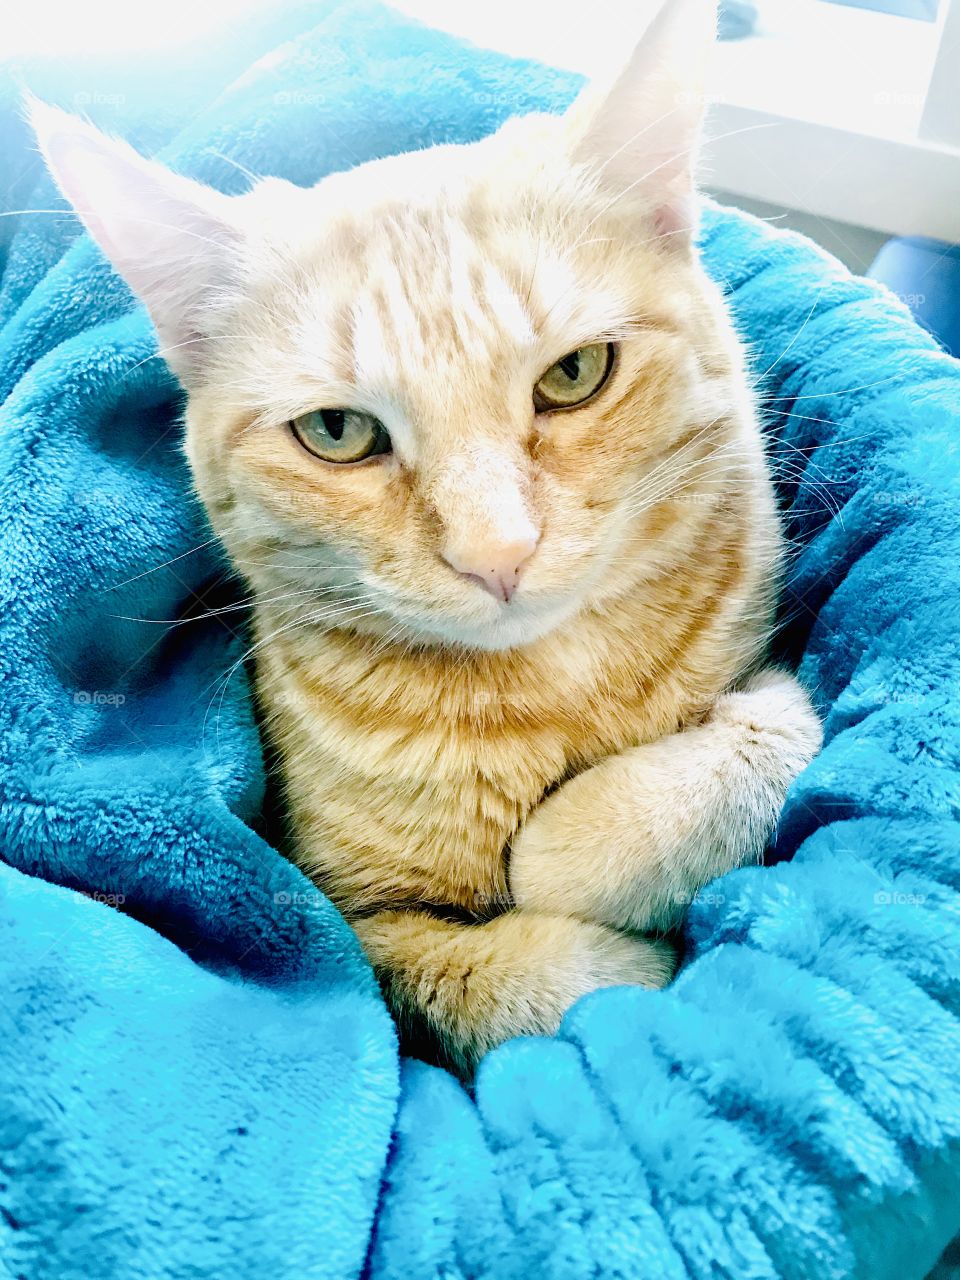 Darling orange tabby cat sitting all cuddled up in beautiful bright blue blanket!! 